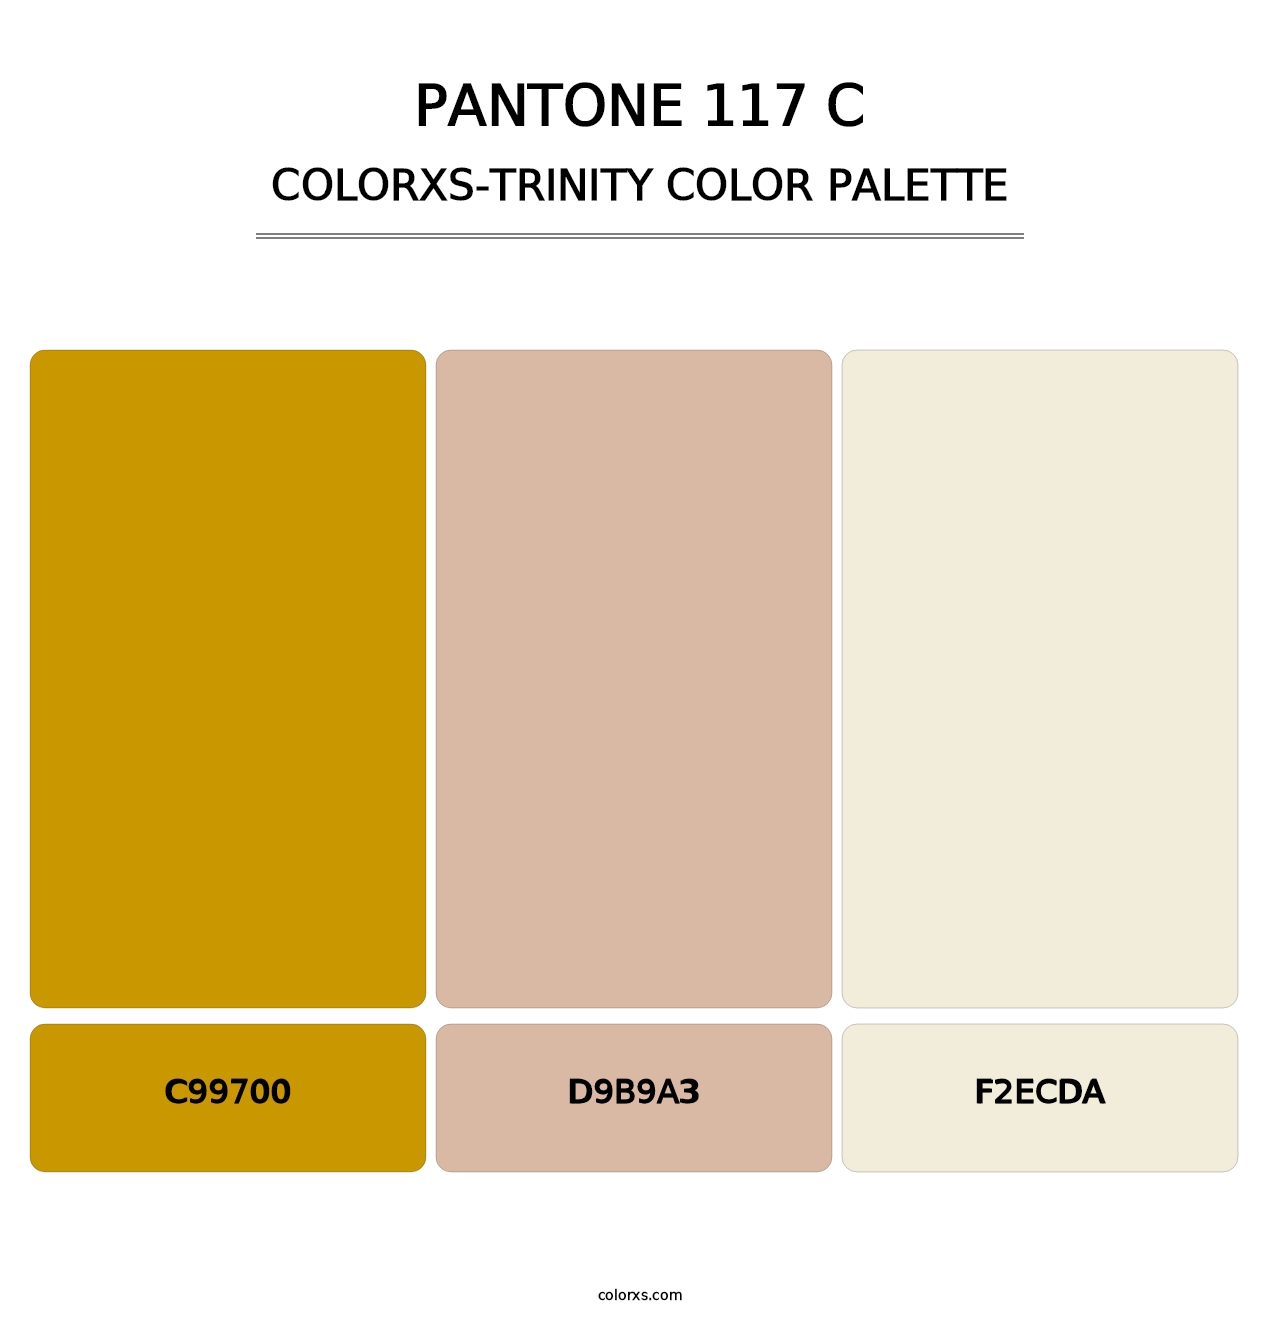 PANTONE 117 C - Colorxs Trinity Palette